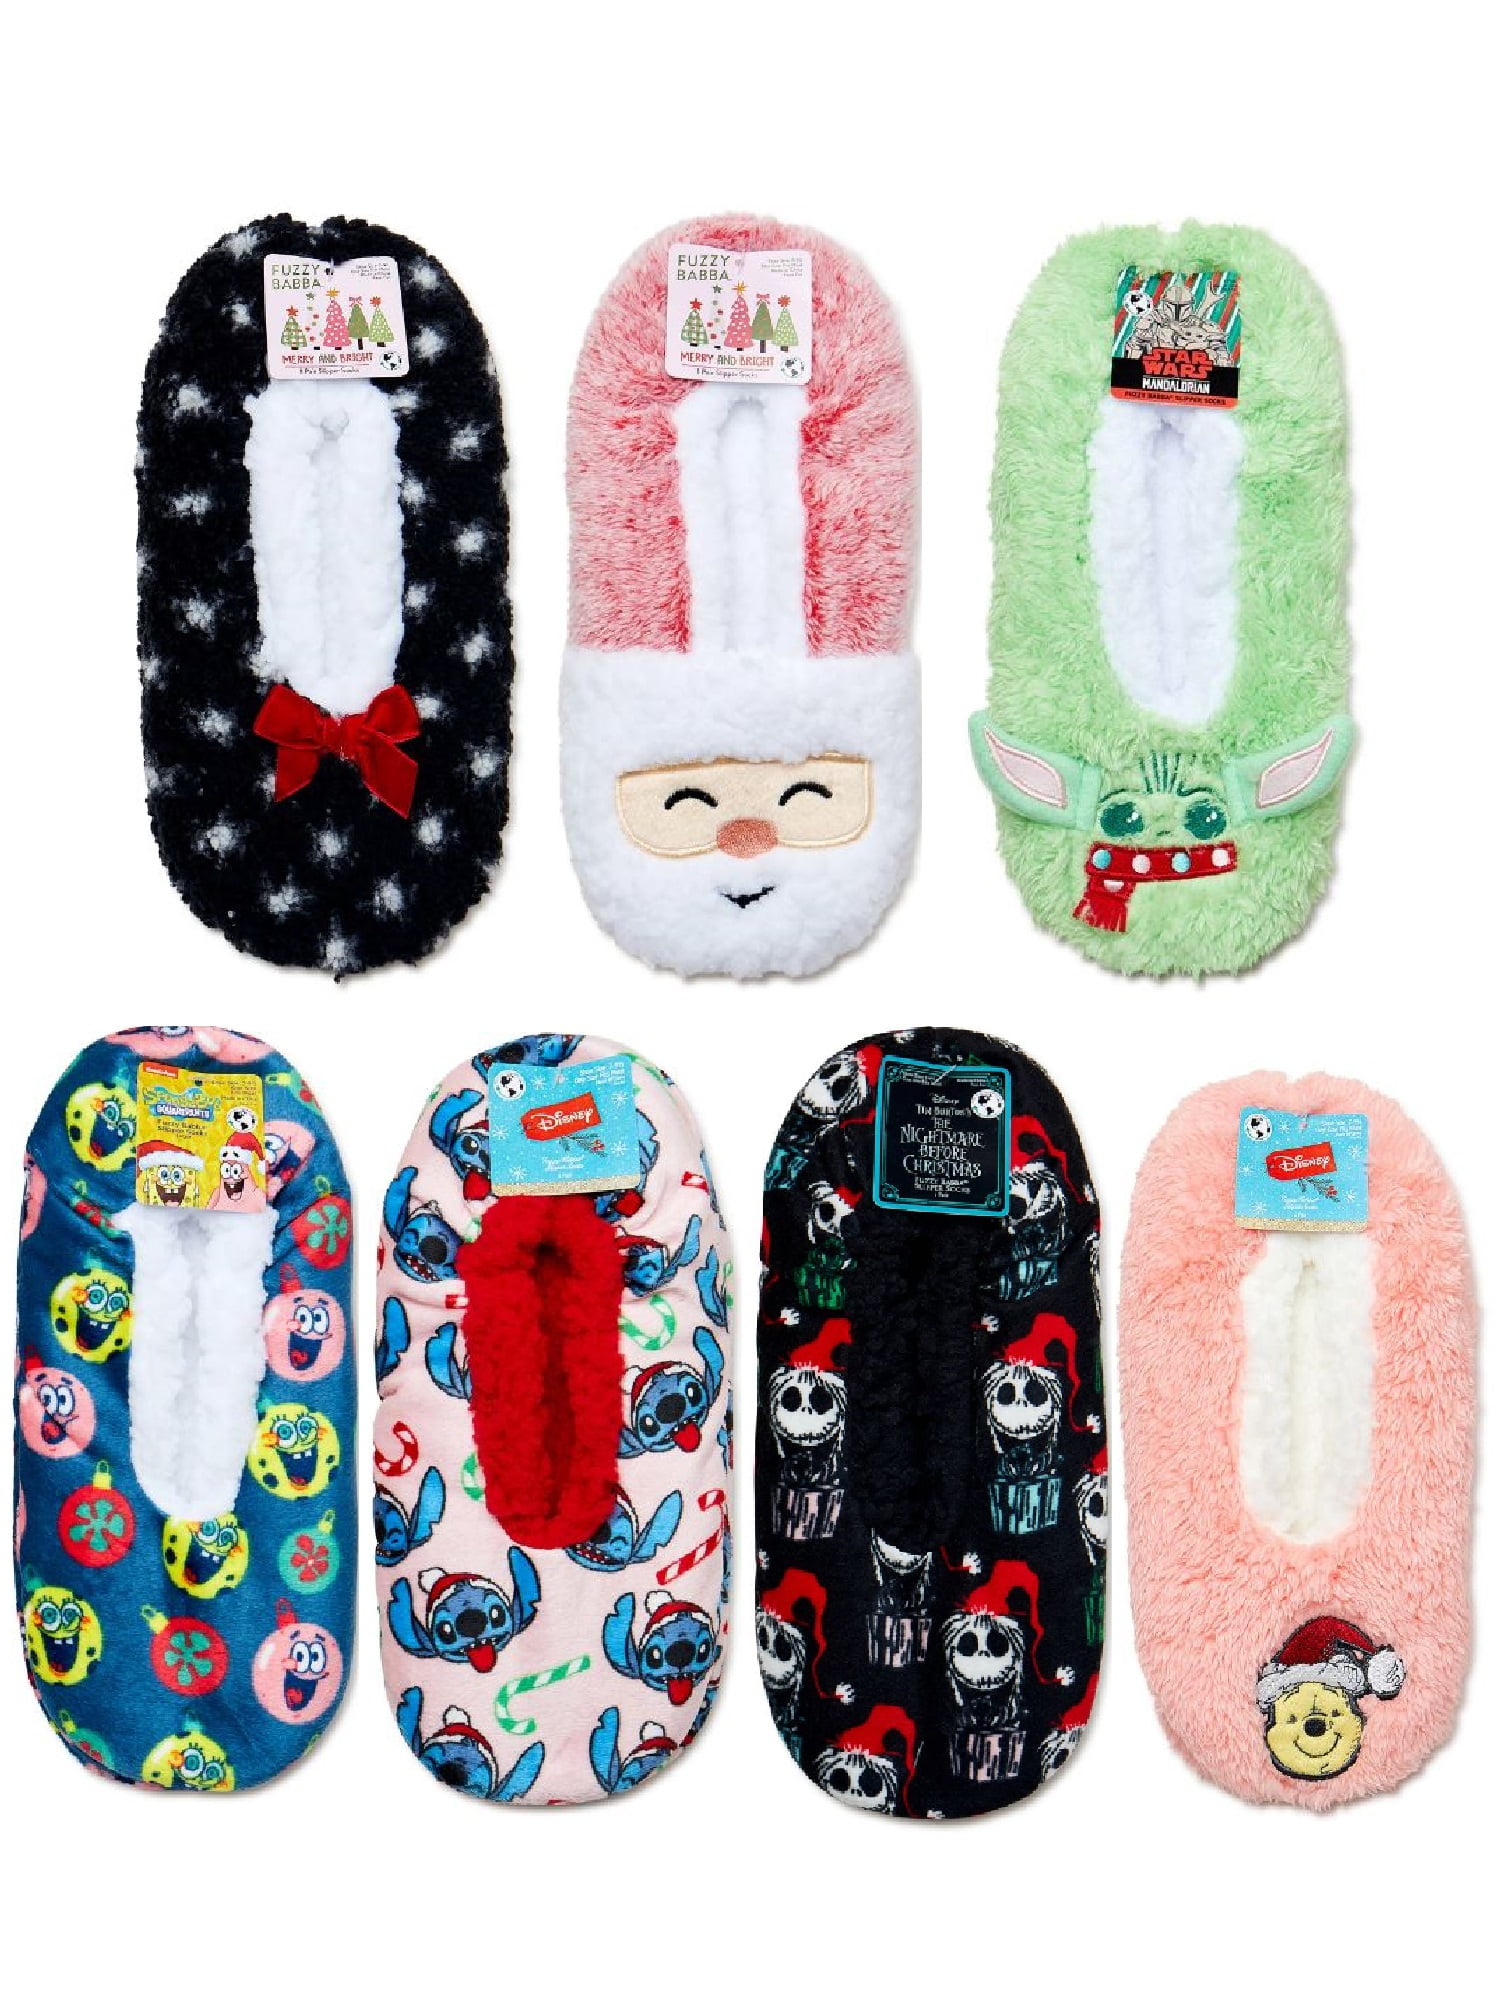 Yacht & Smith Christmas Socks, Novelty Holiday Socks, Fun Colorful Festive,  Crew, Slipper Socks, Size 9-11